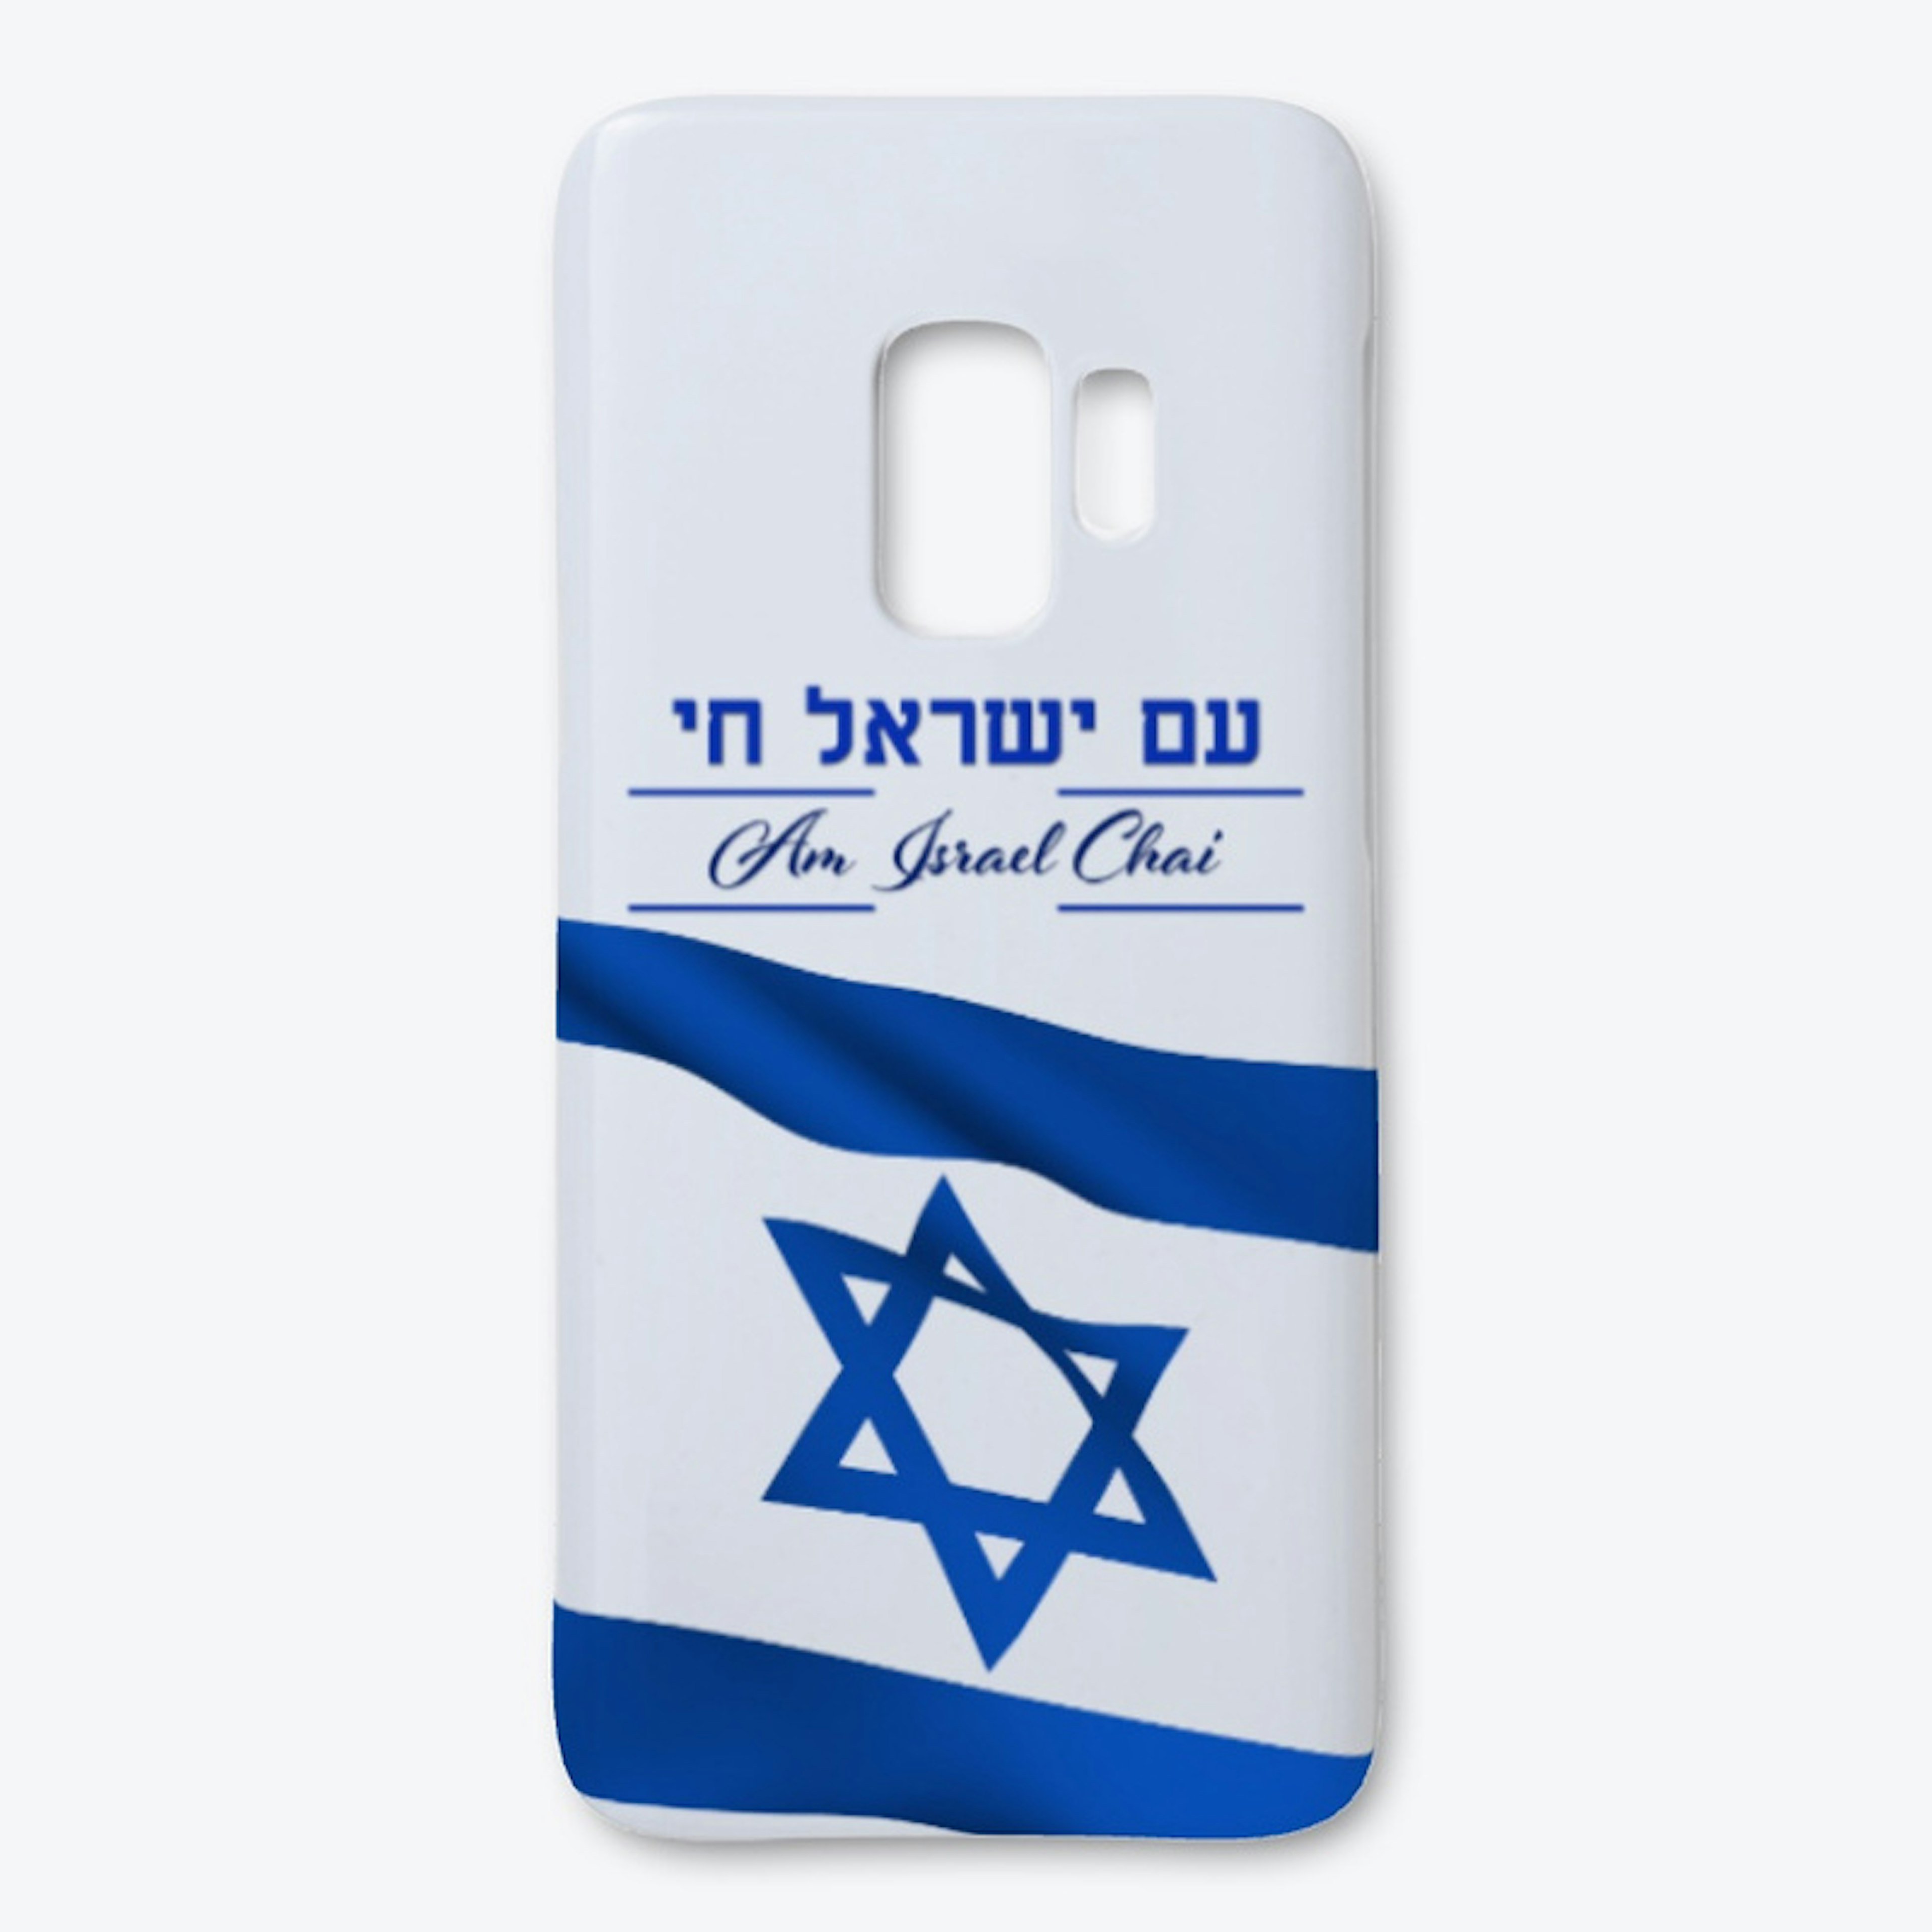 AM ISRAEL CHAI Phone Cases!